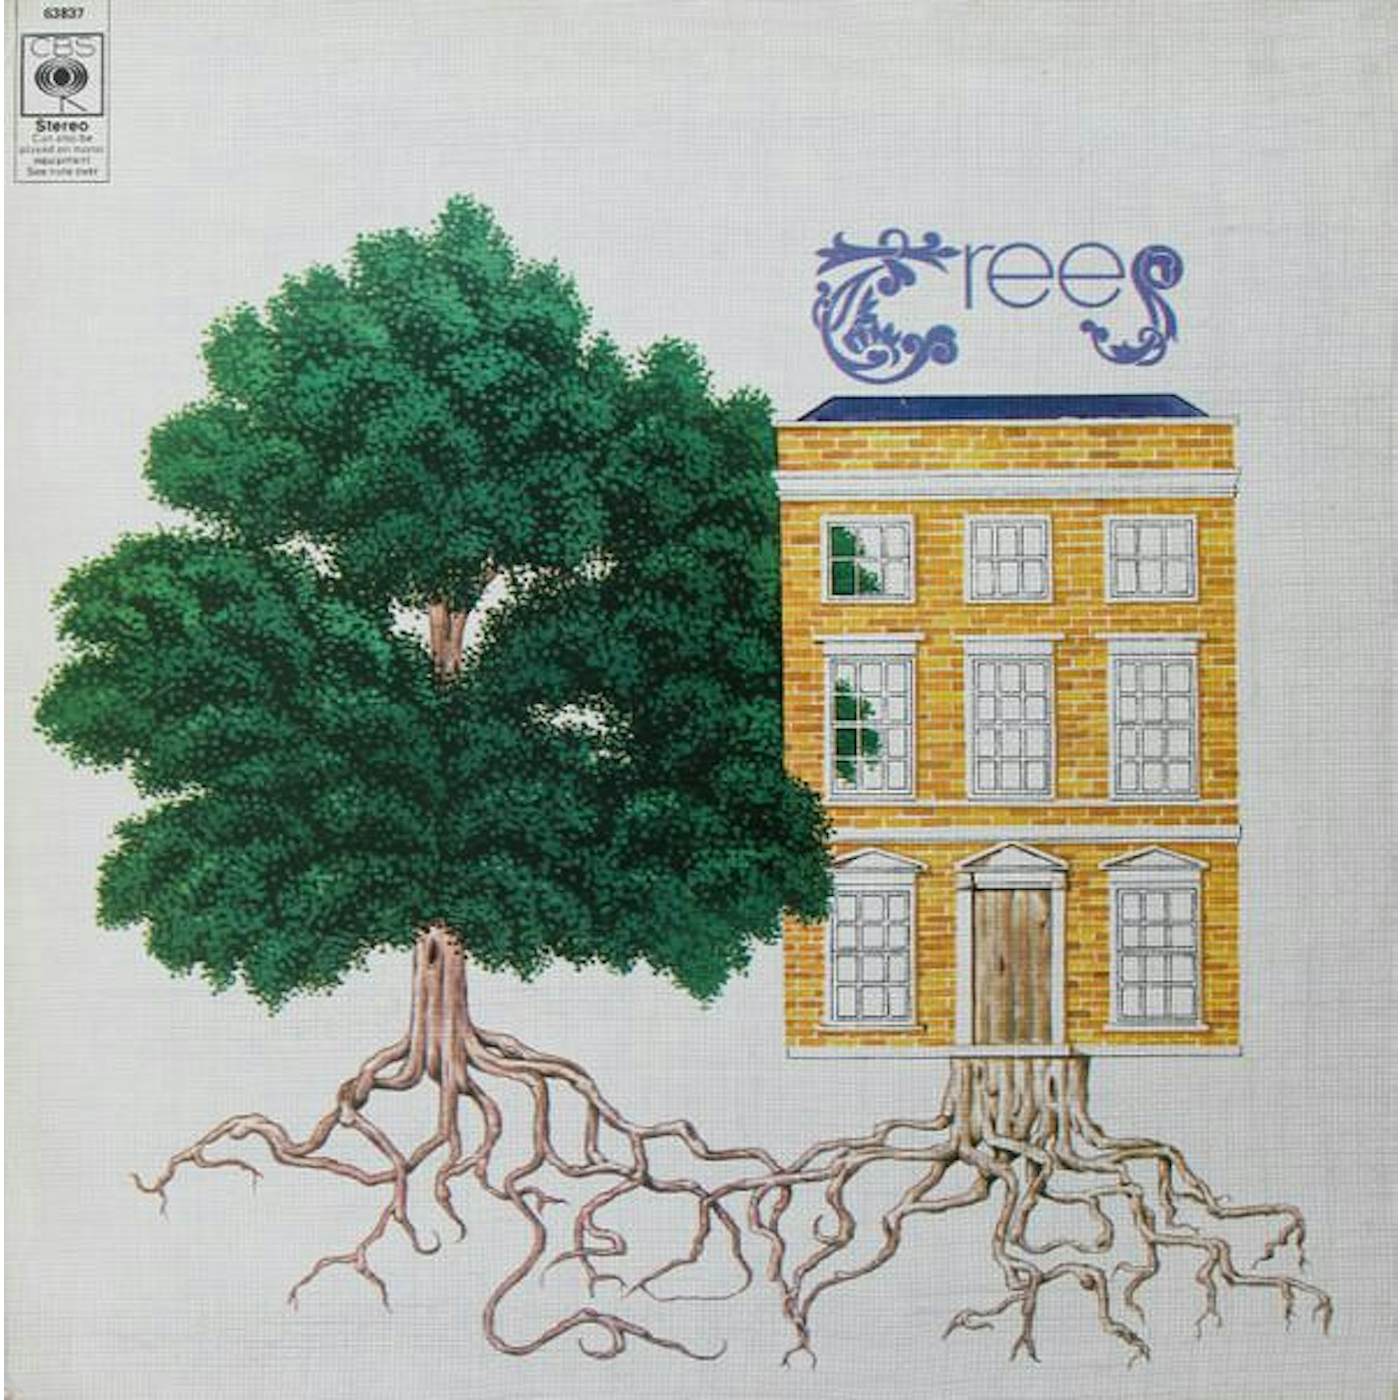 Trees GARDEN OF JANE DELAWNEY Vinyl Record